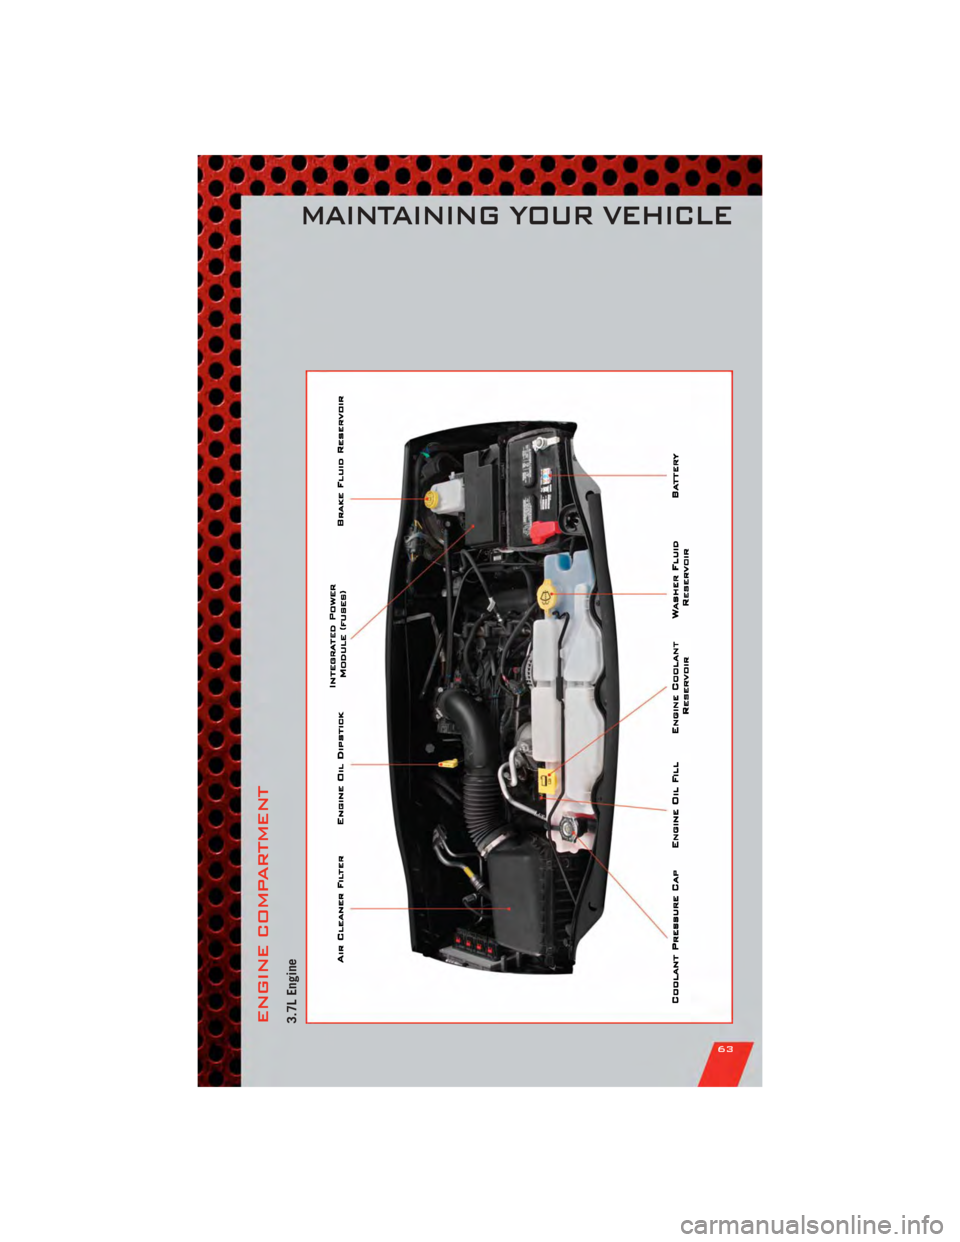 DODGE NITRO 2011 1.G Repair Manual ENGINE COMPARTMENT3.7L Engine
MAINTAINING YOUR VEHICLE
63 